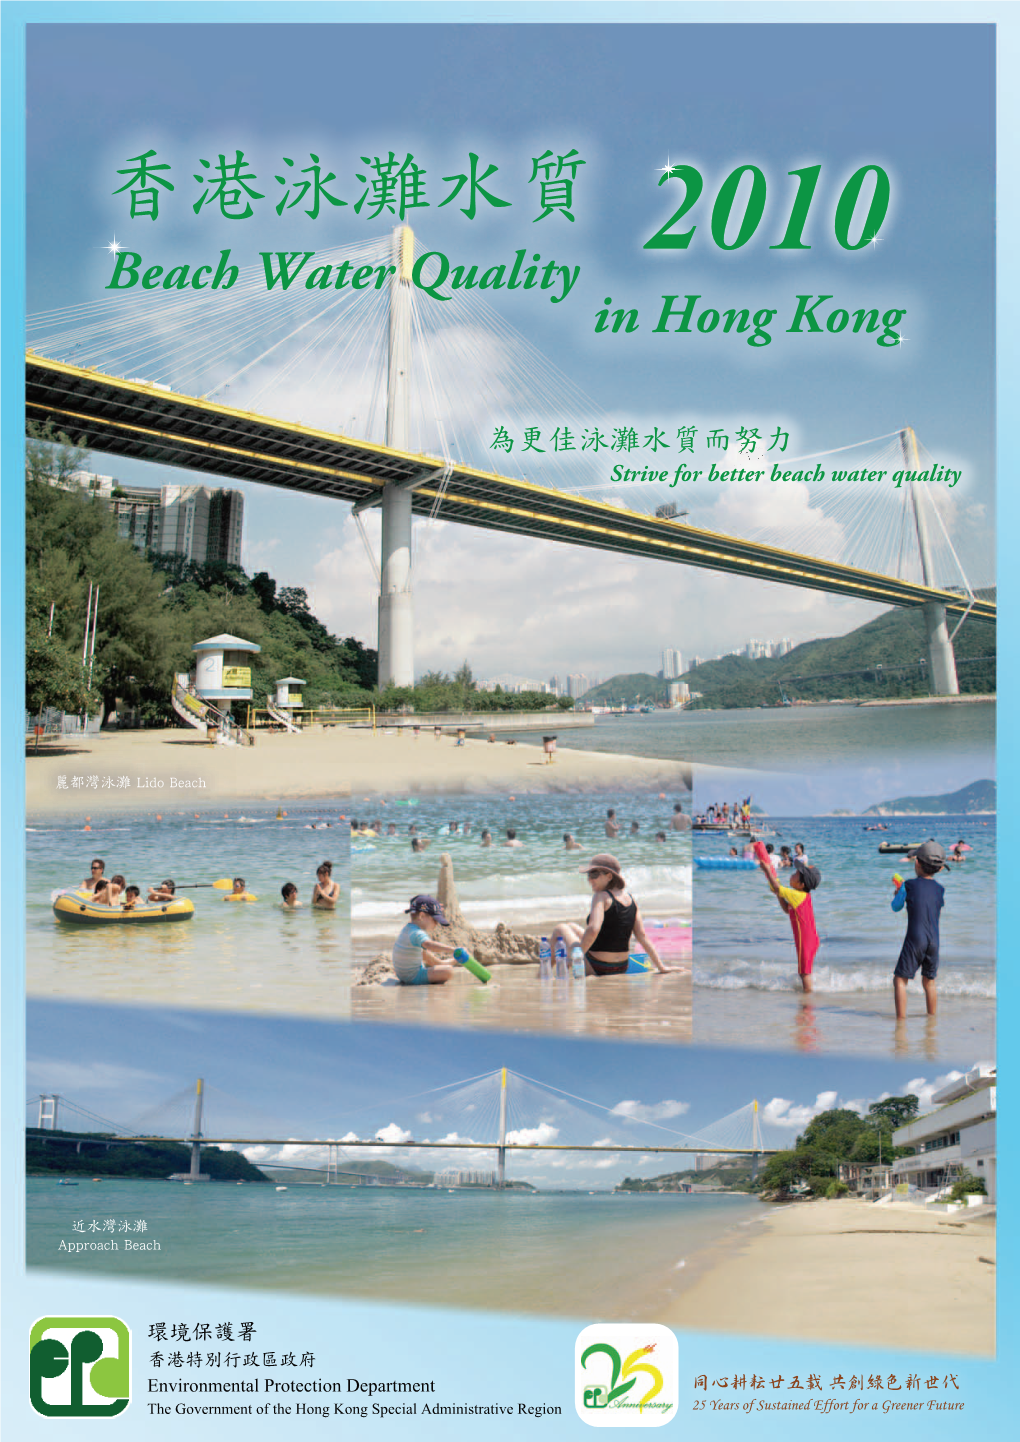 Beach Water Quality in Hong Kong 2010